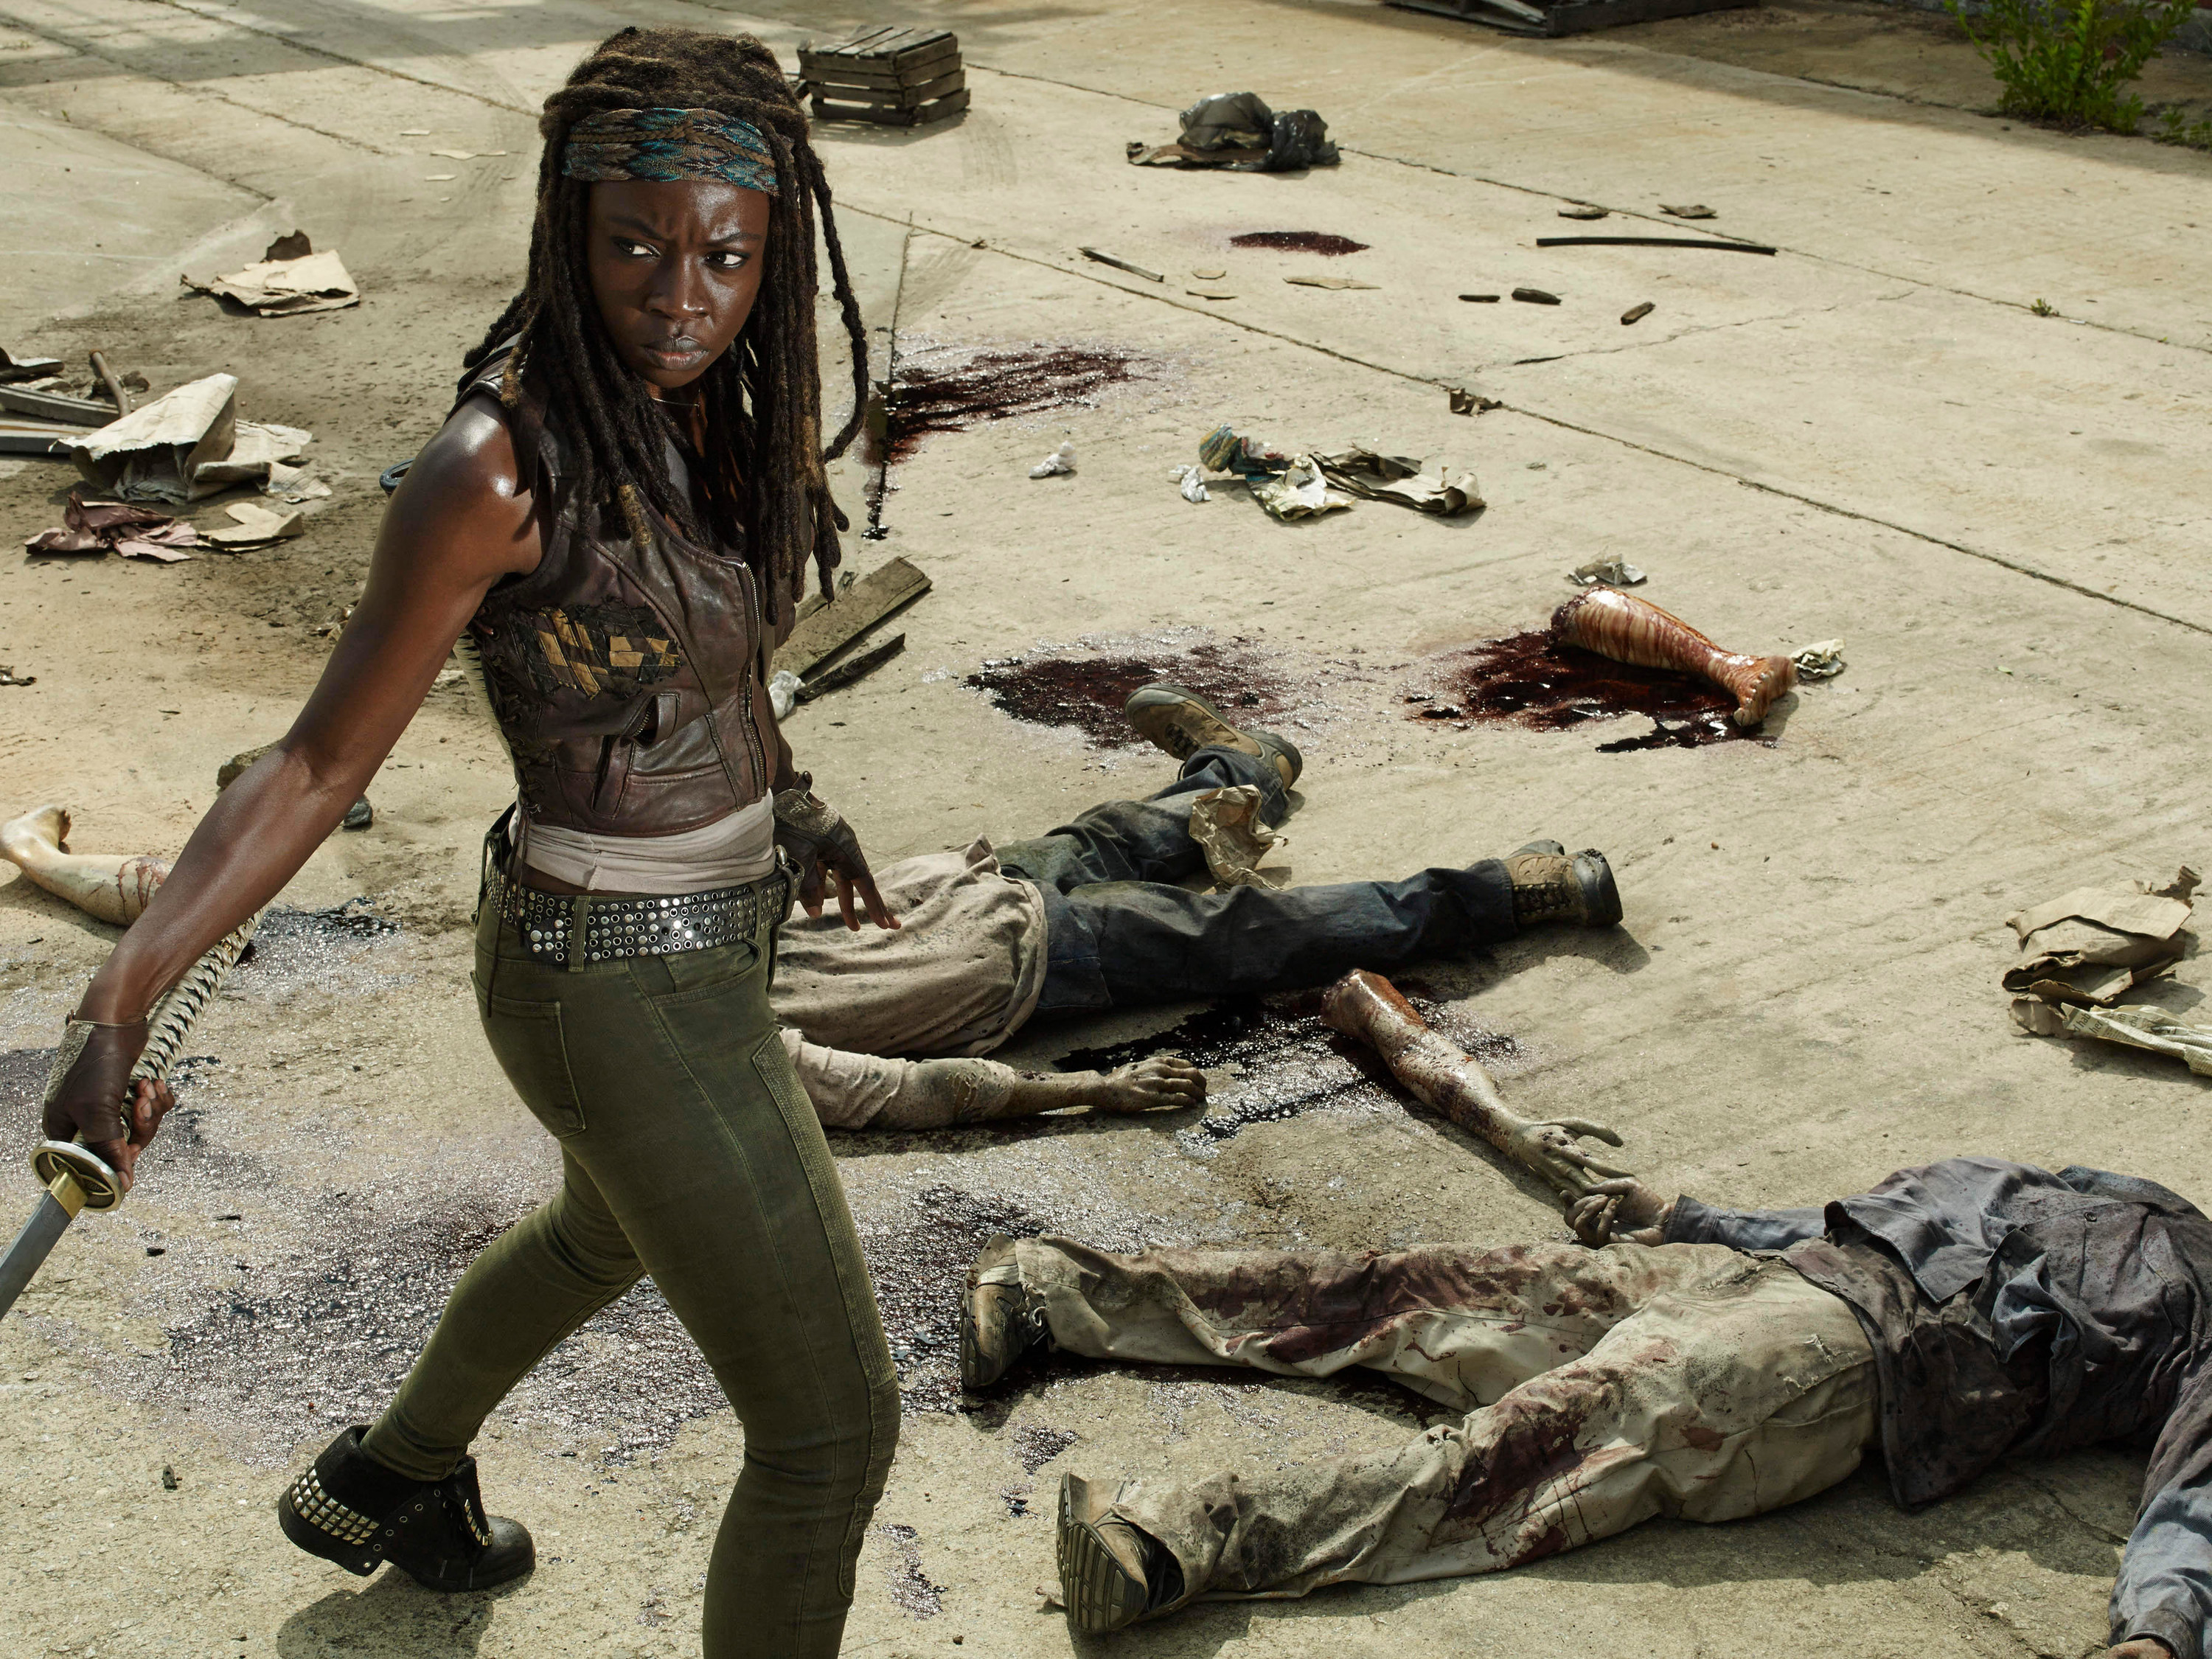 Danai Gurira in The Walking Dead, holding a weapon